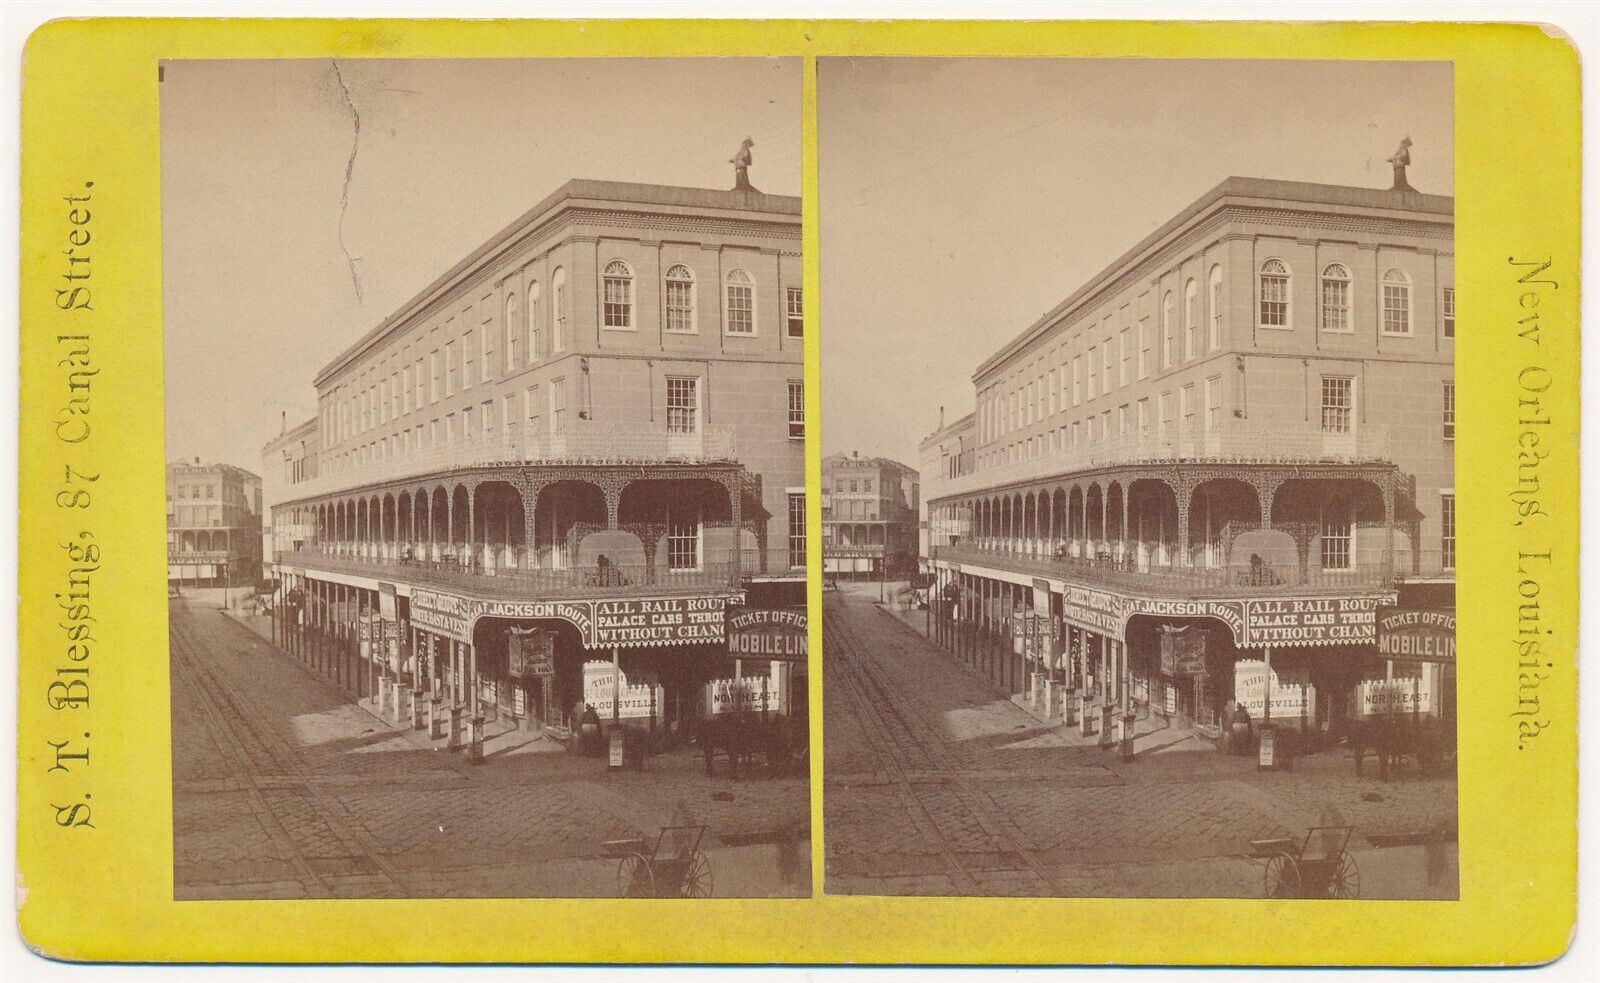 LOUISIANA SV - New Orleans - City Hotel - ST Blessing 1880s